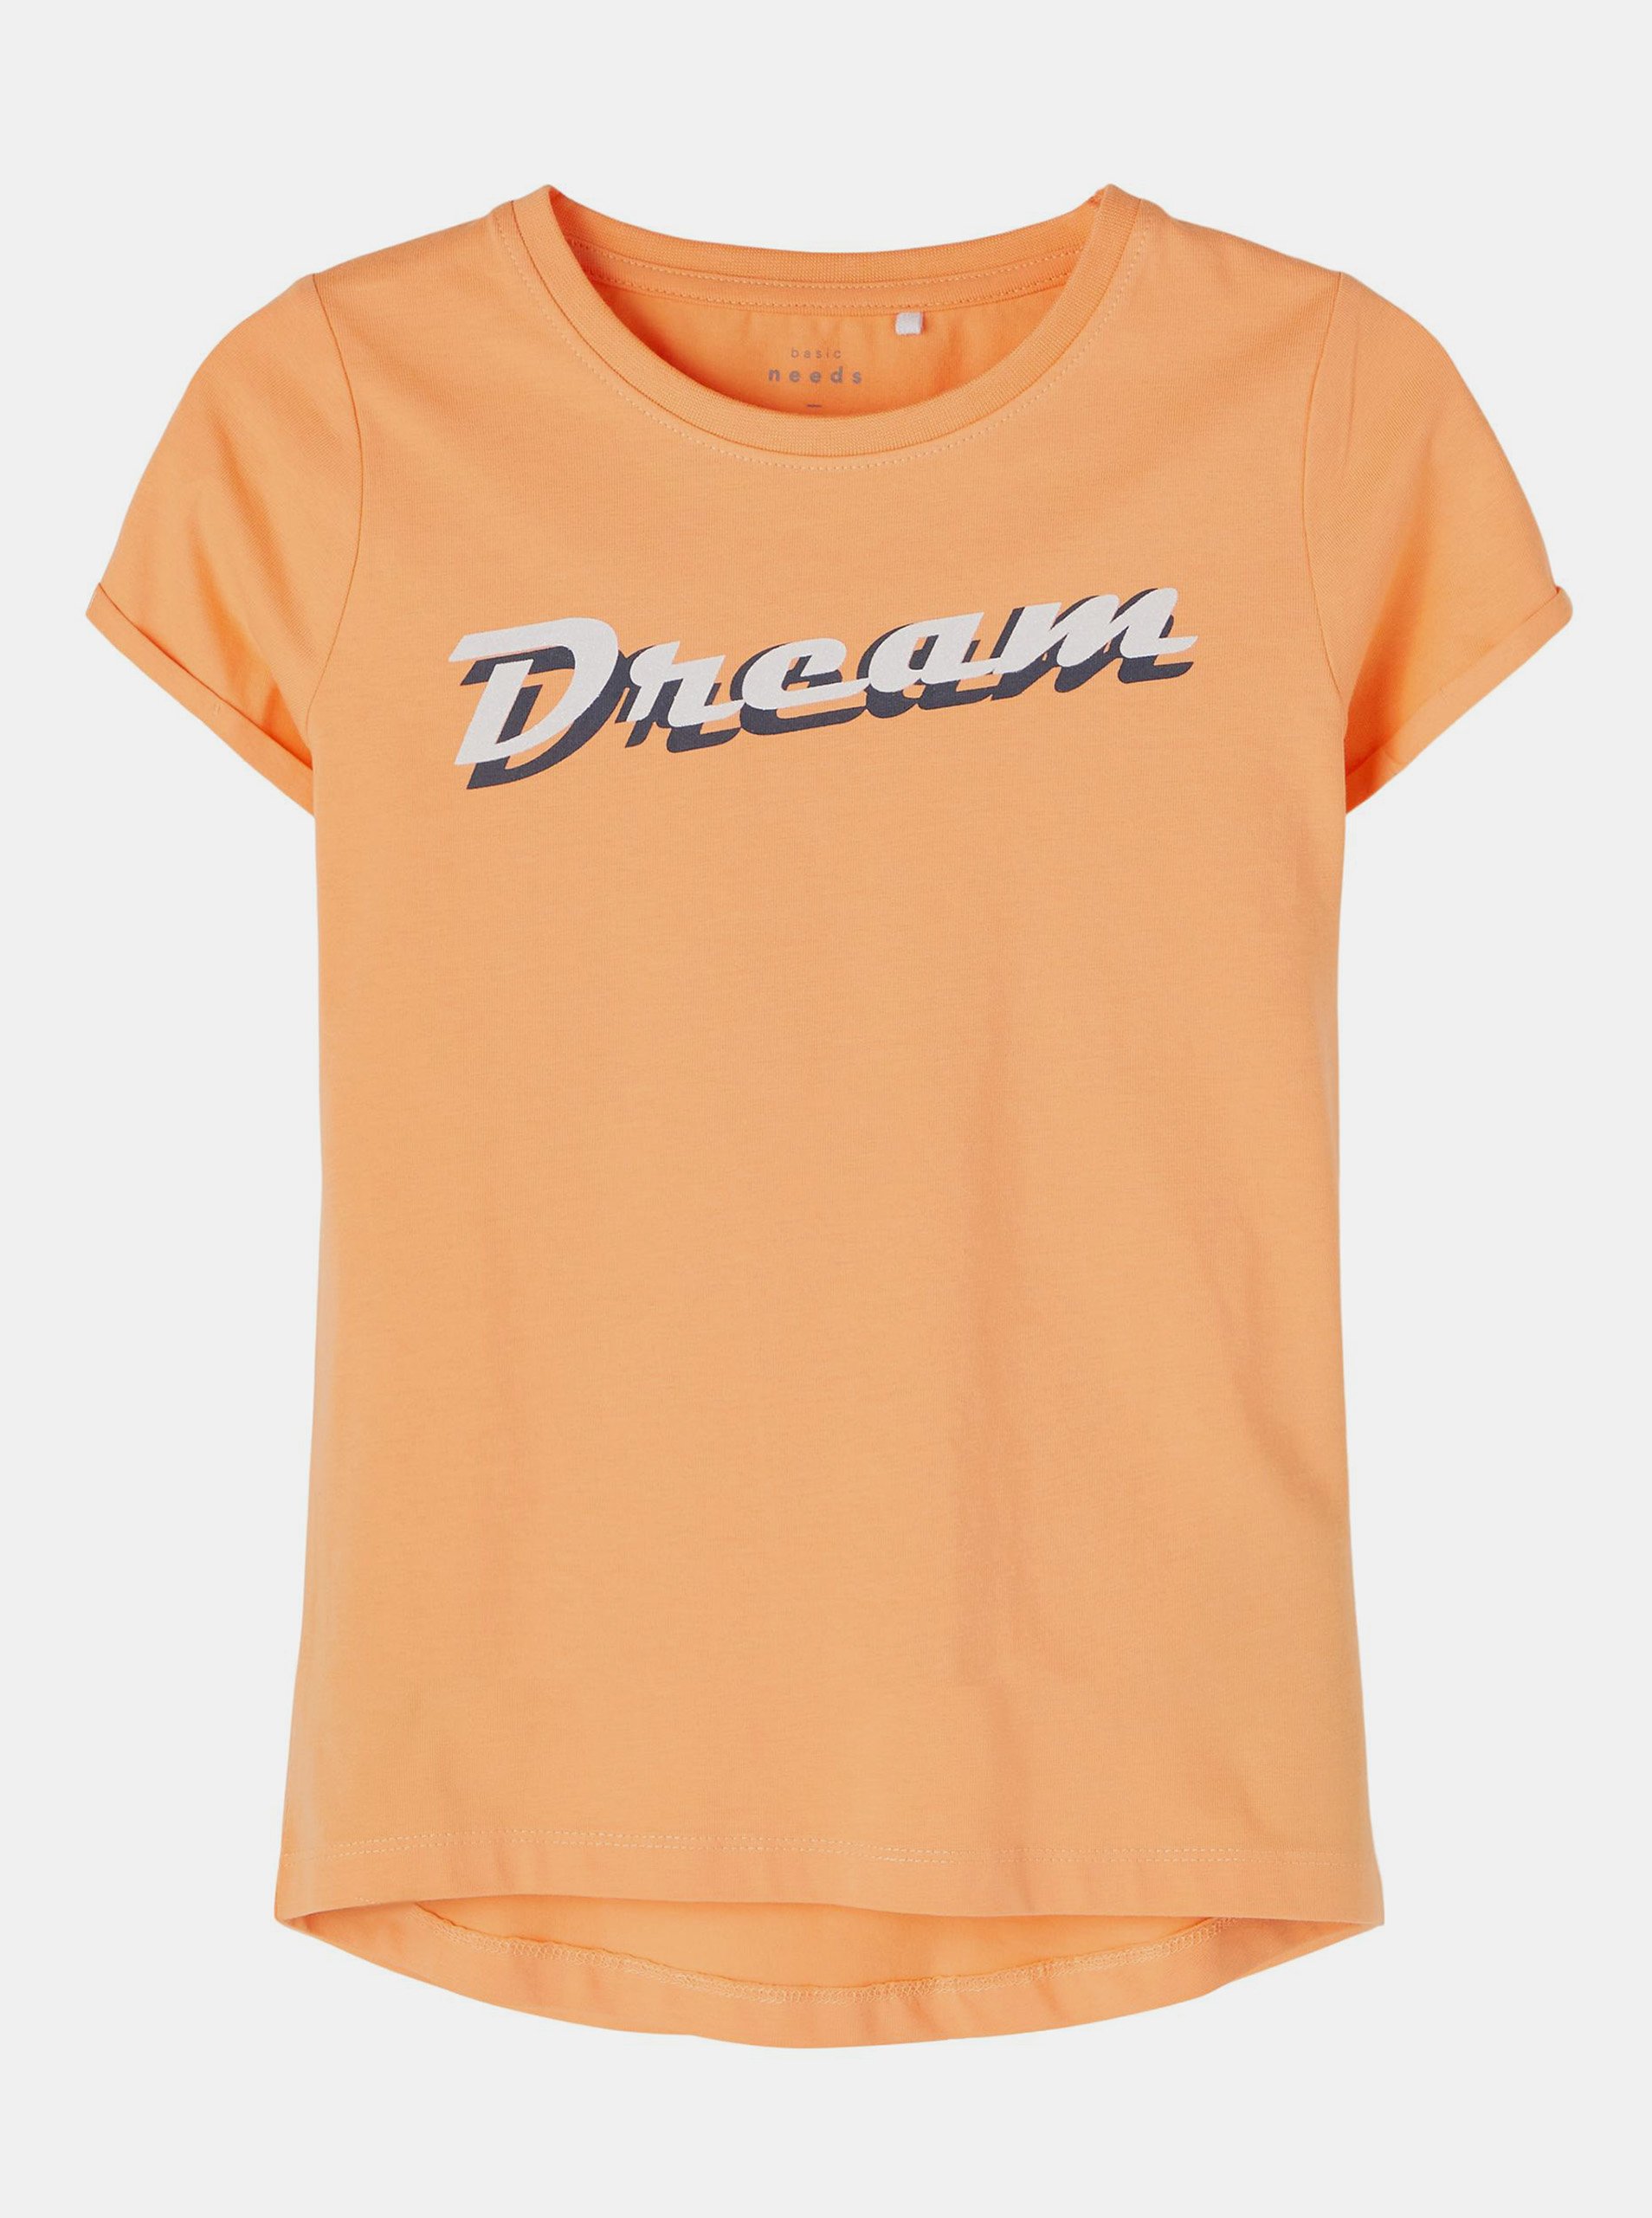 Orange girly T-shirt with print name it Vix - unisex